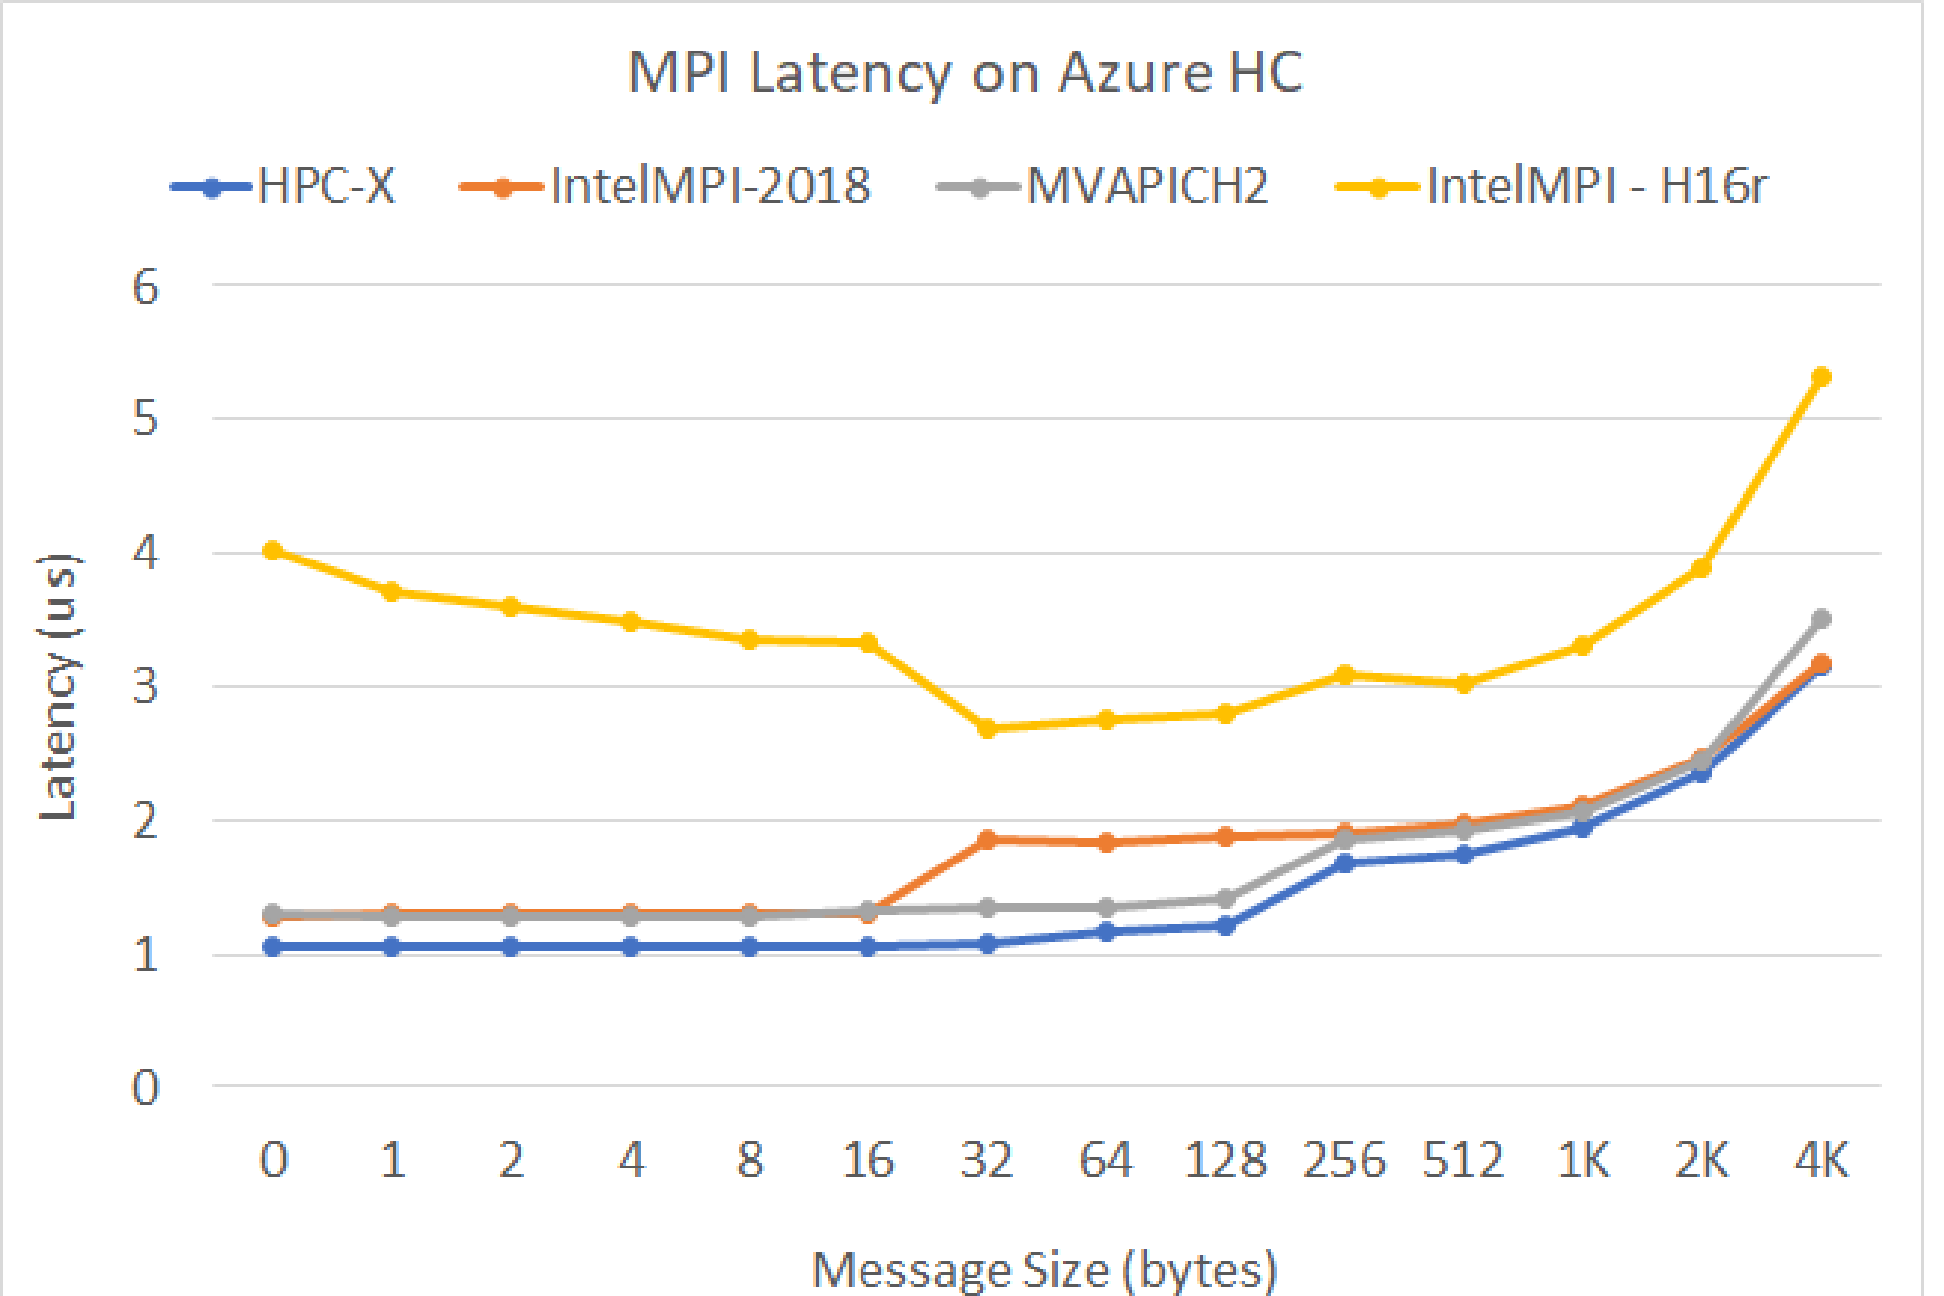 MPI latency on Azure HC.